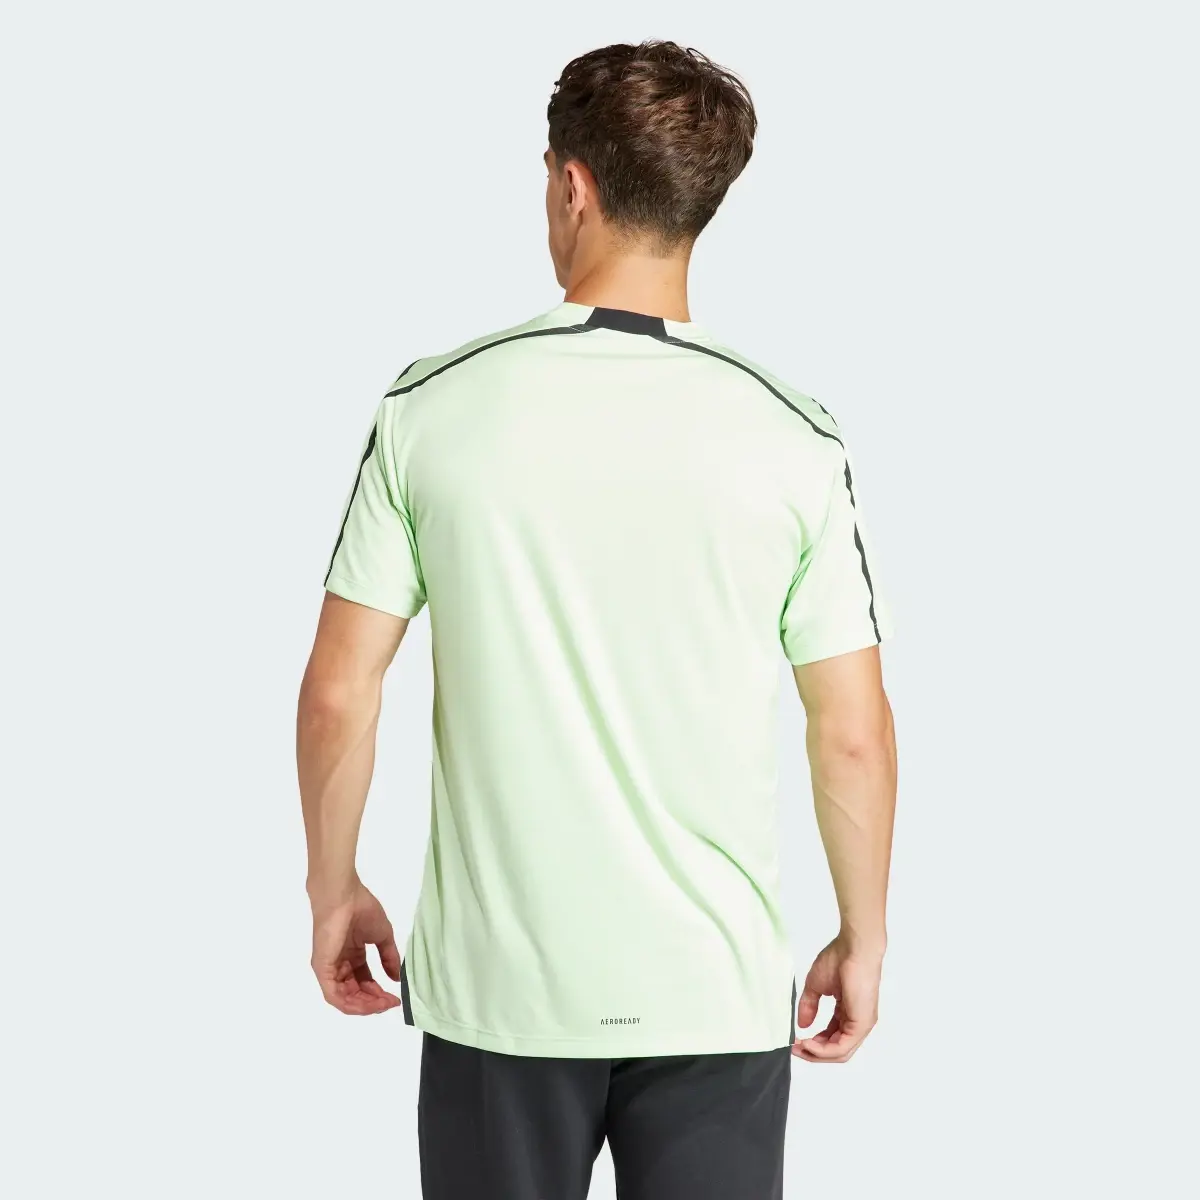 Adidas T-shirt d'entraînement Designed for Training Adistrong. 3